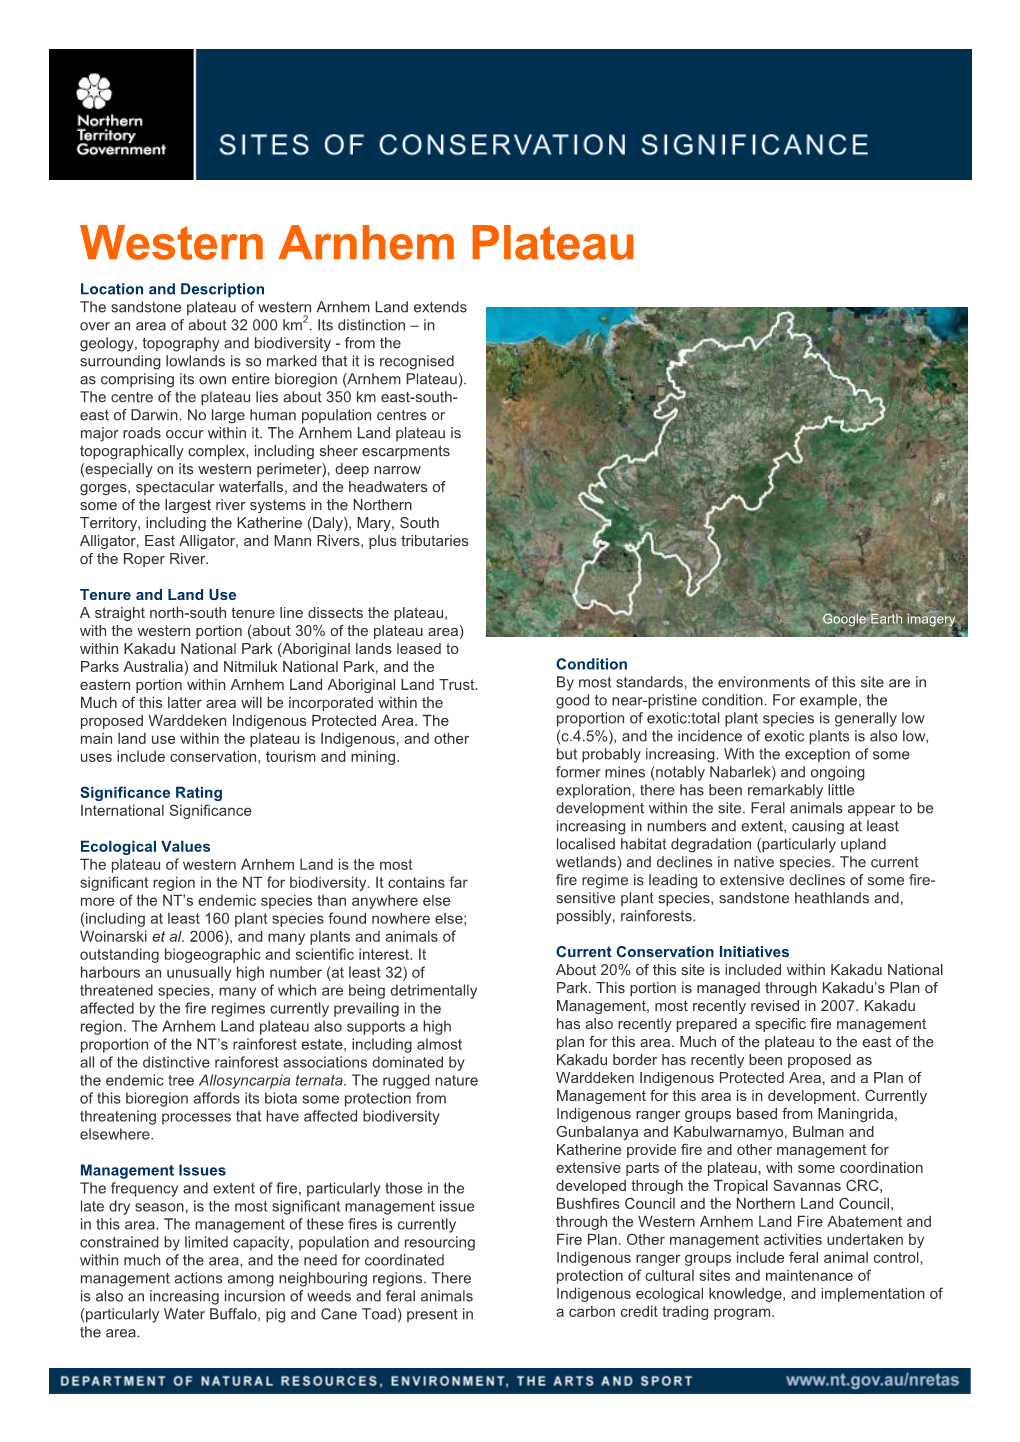 Western Arnhem Plateau Location and Description the Sandstone Plateau of Western Arnhem Land Extends Over an Area of About 32 000 Km2